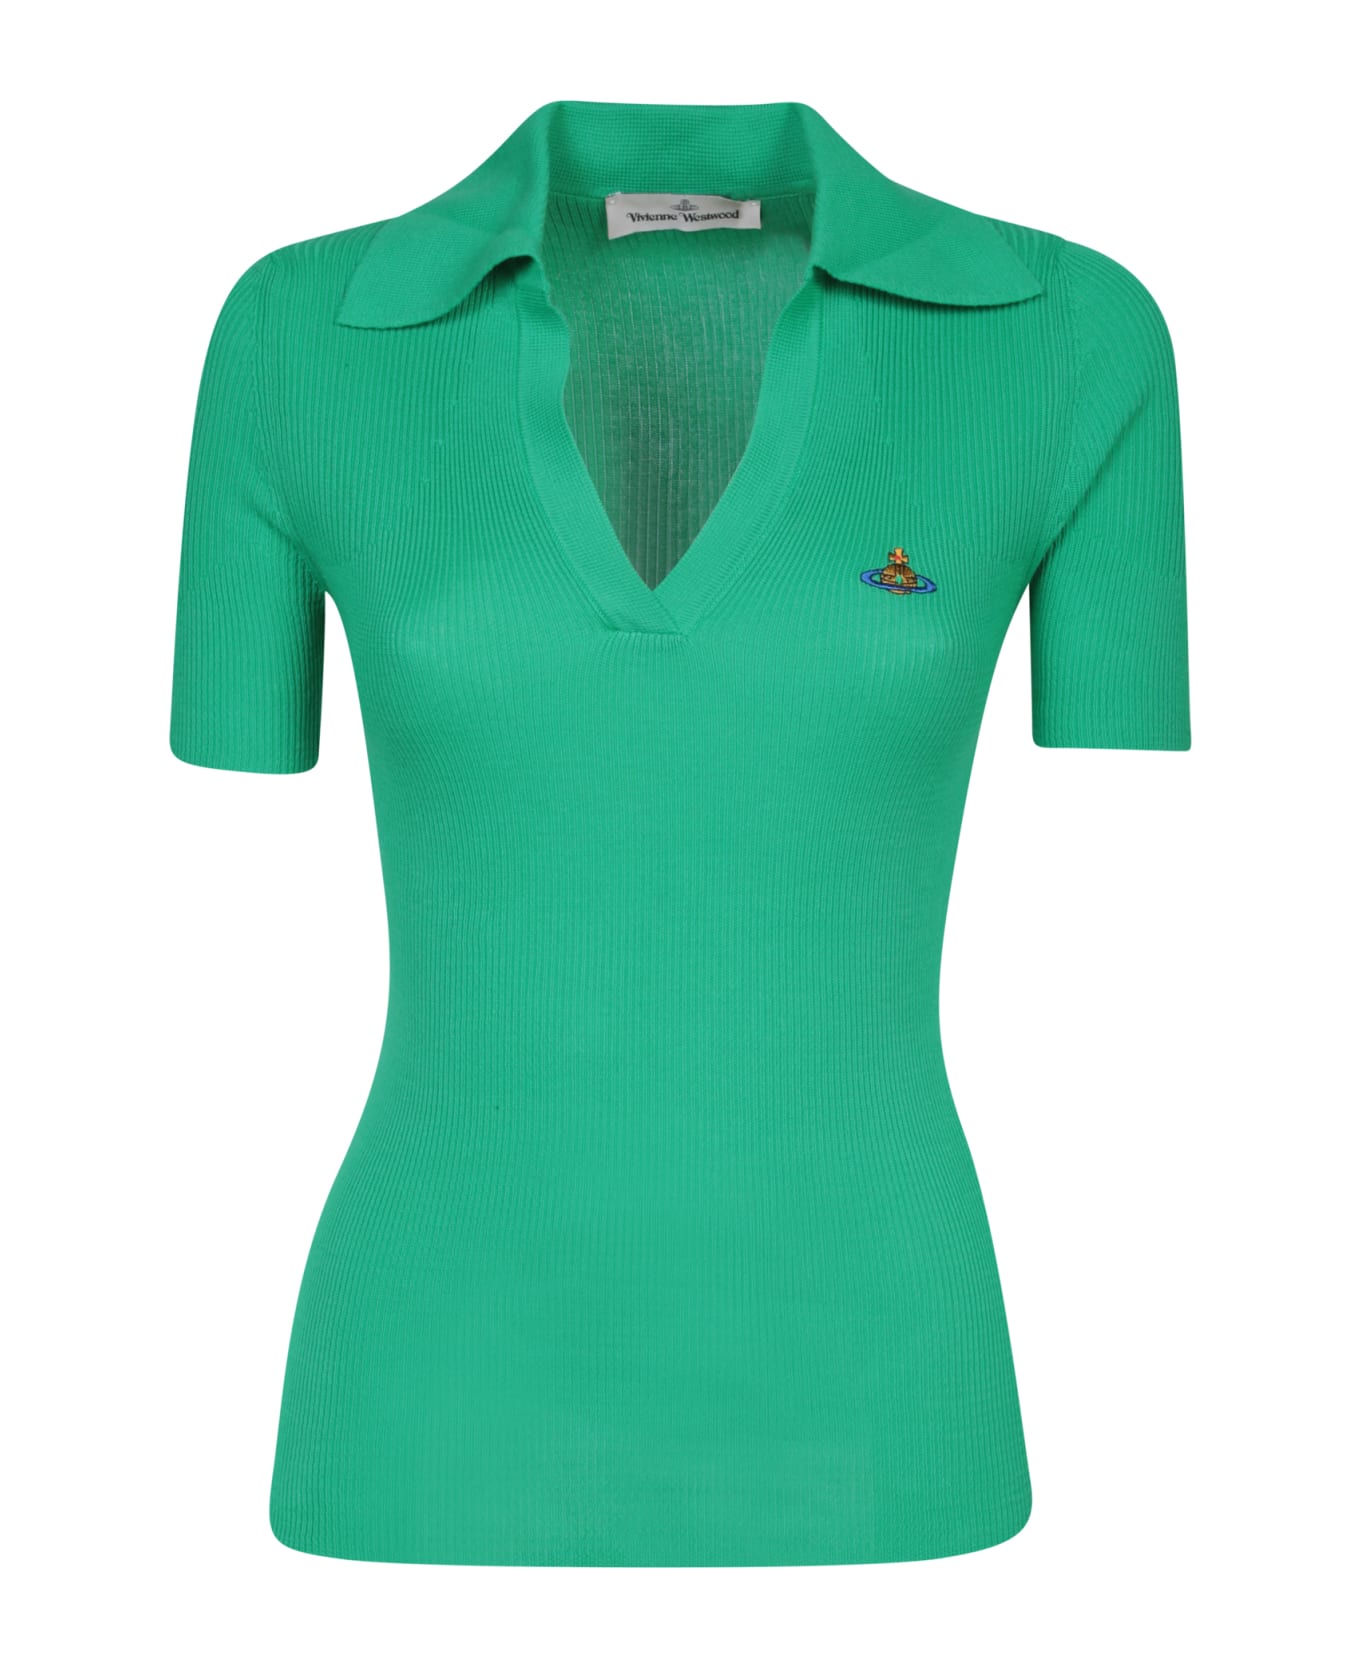 Vivienne Westwood Marina Green Polo Shirt - Green